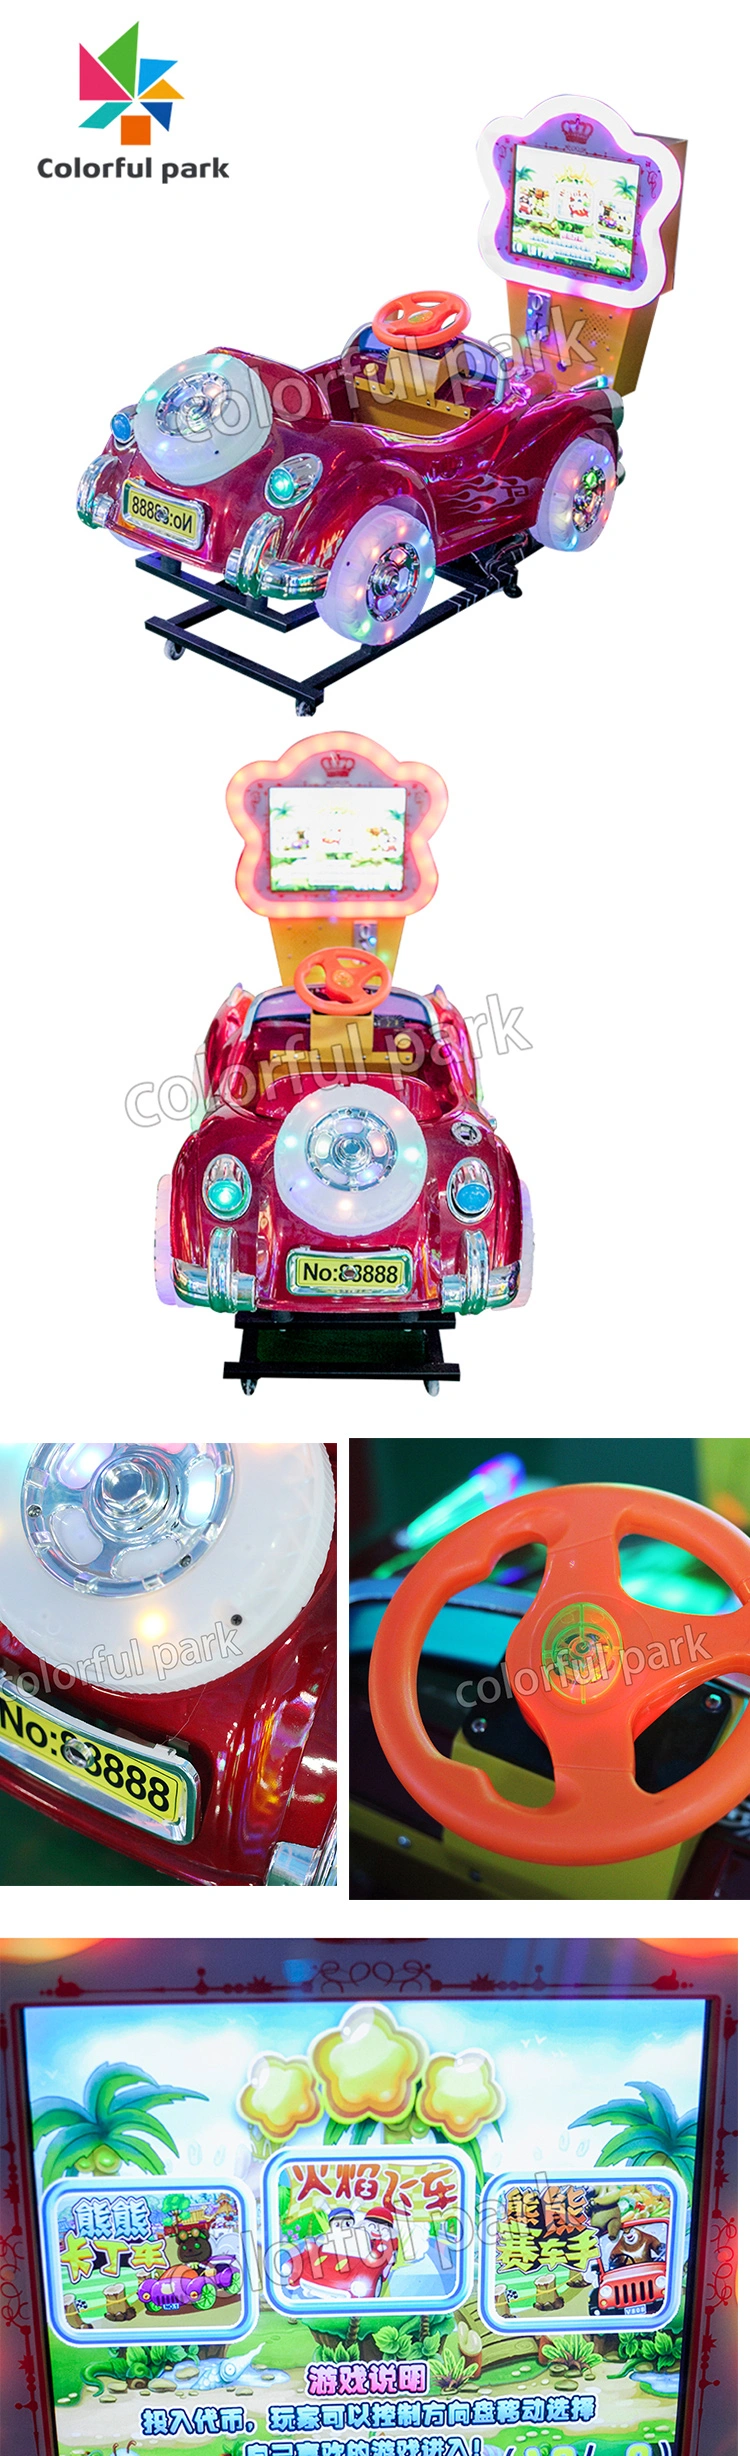 Colorful Park Indoor Playground Video Kiddie Ride Swing Arcade Game Machine Coin Operated Kiddie Rides